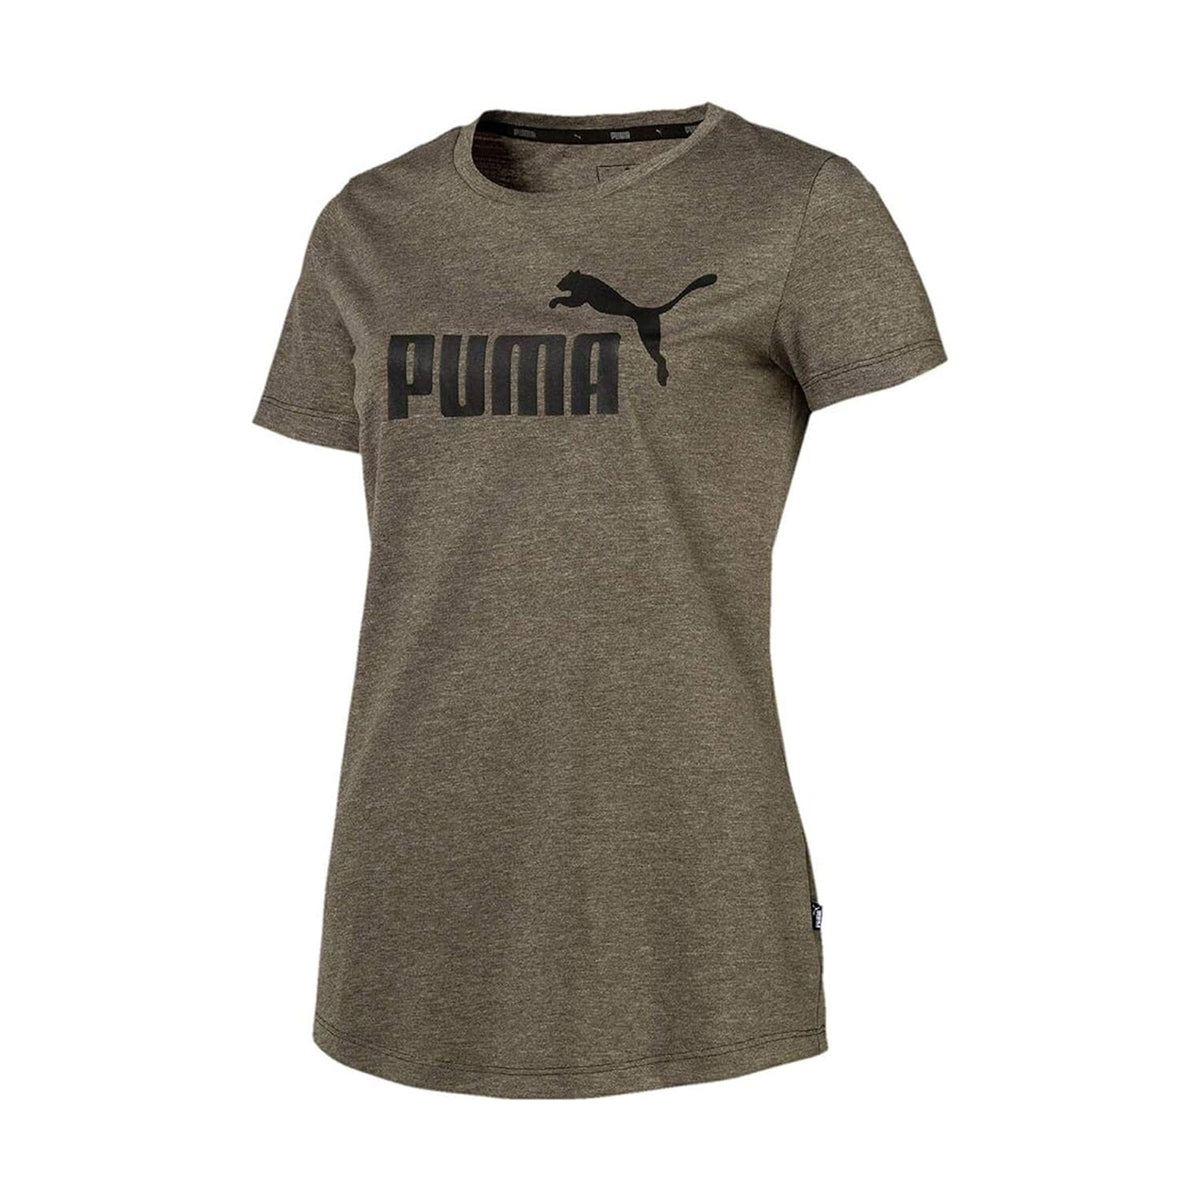 Puma Womens Heather T-shirt - Green - UK Size 8